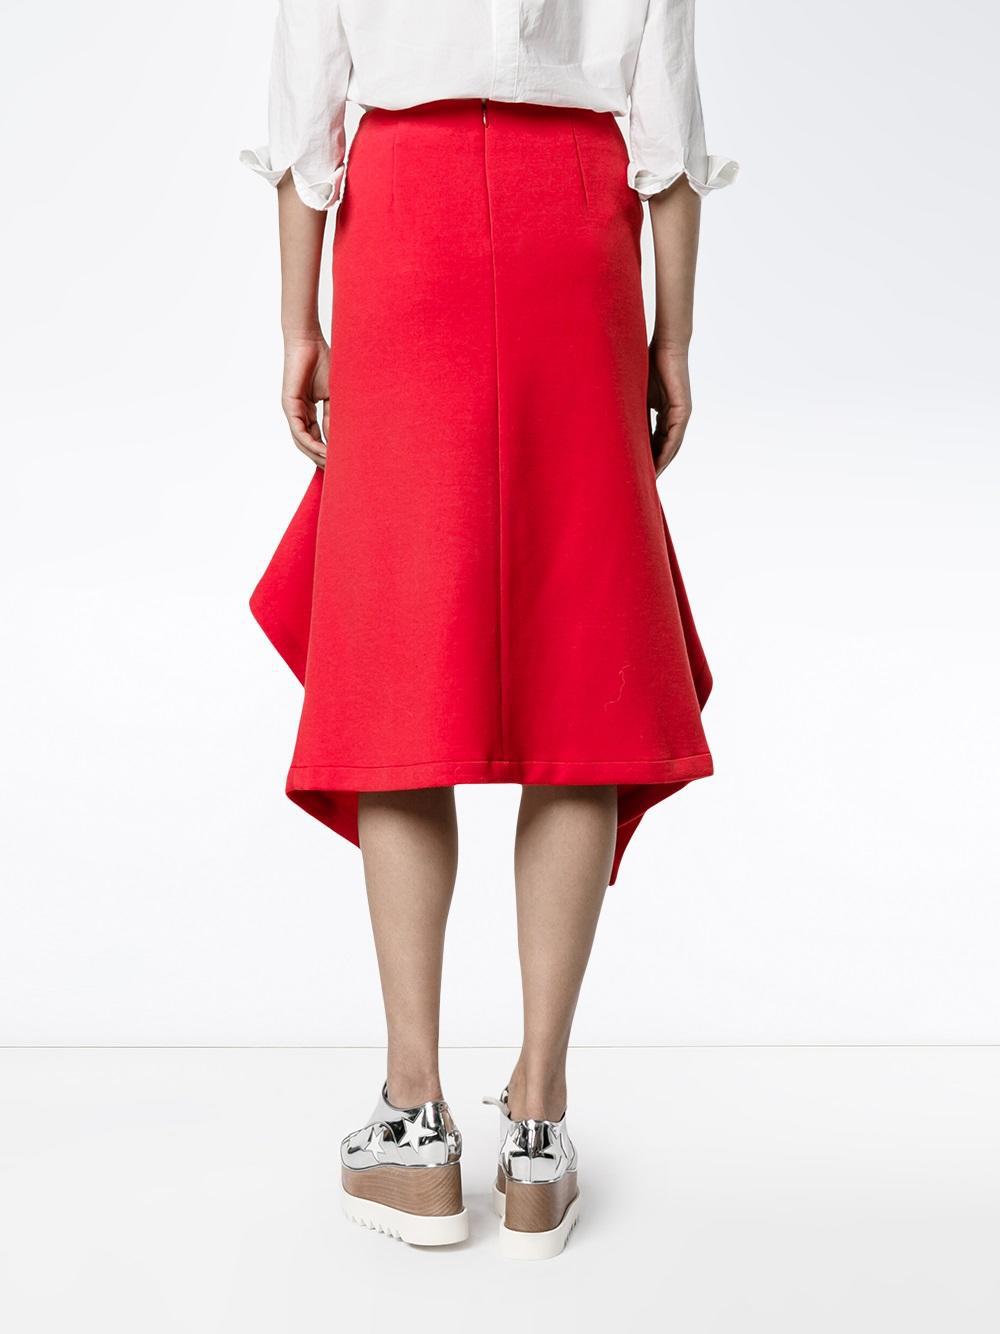 Marni Wool Asymmetric Skirt in Red - Lyst